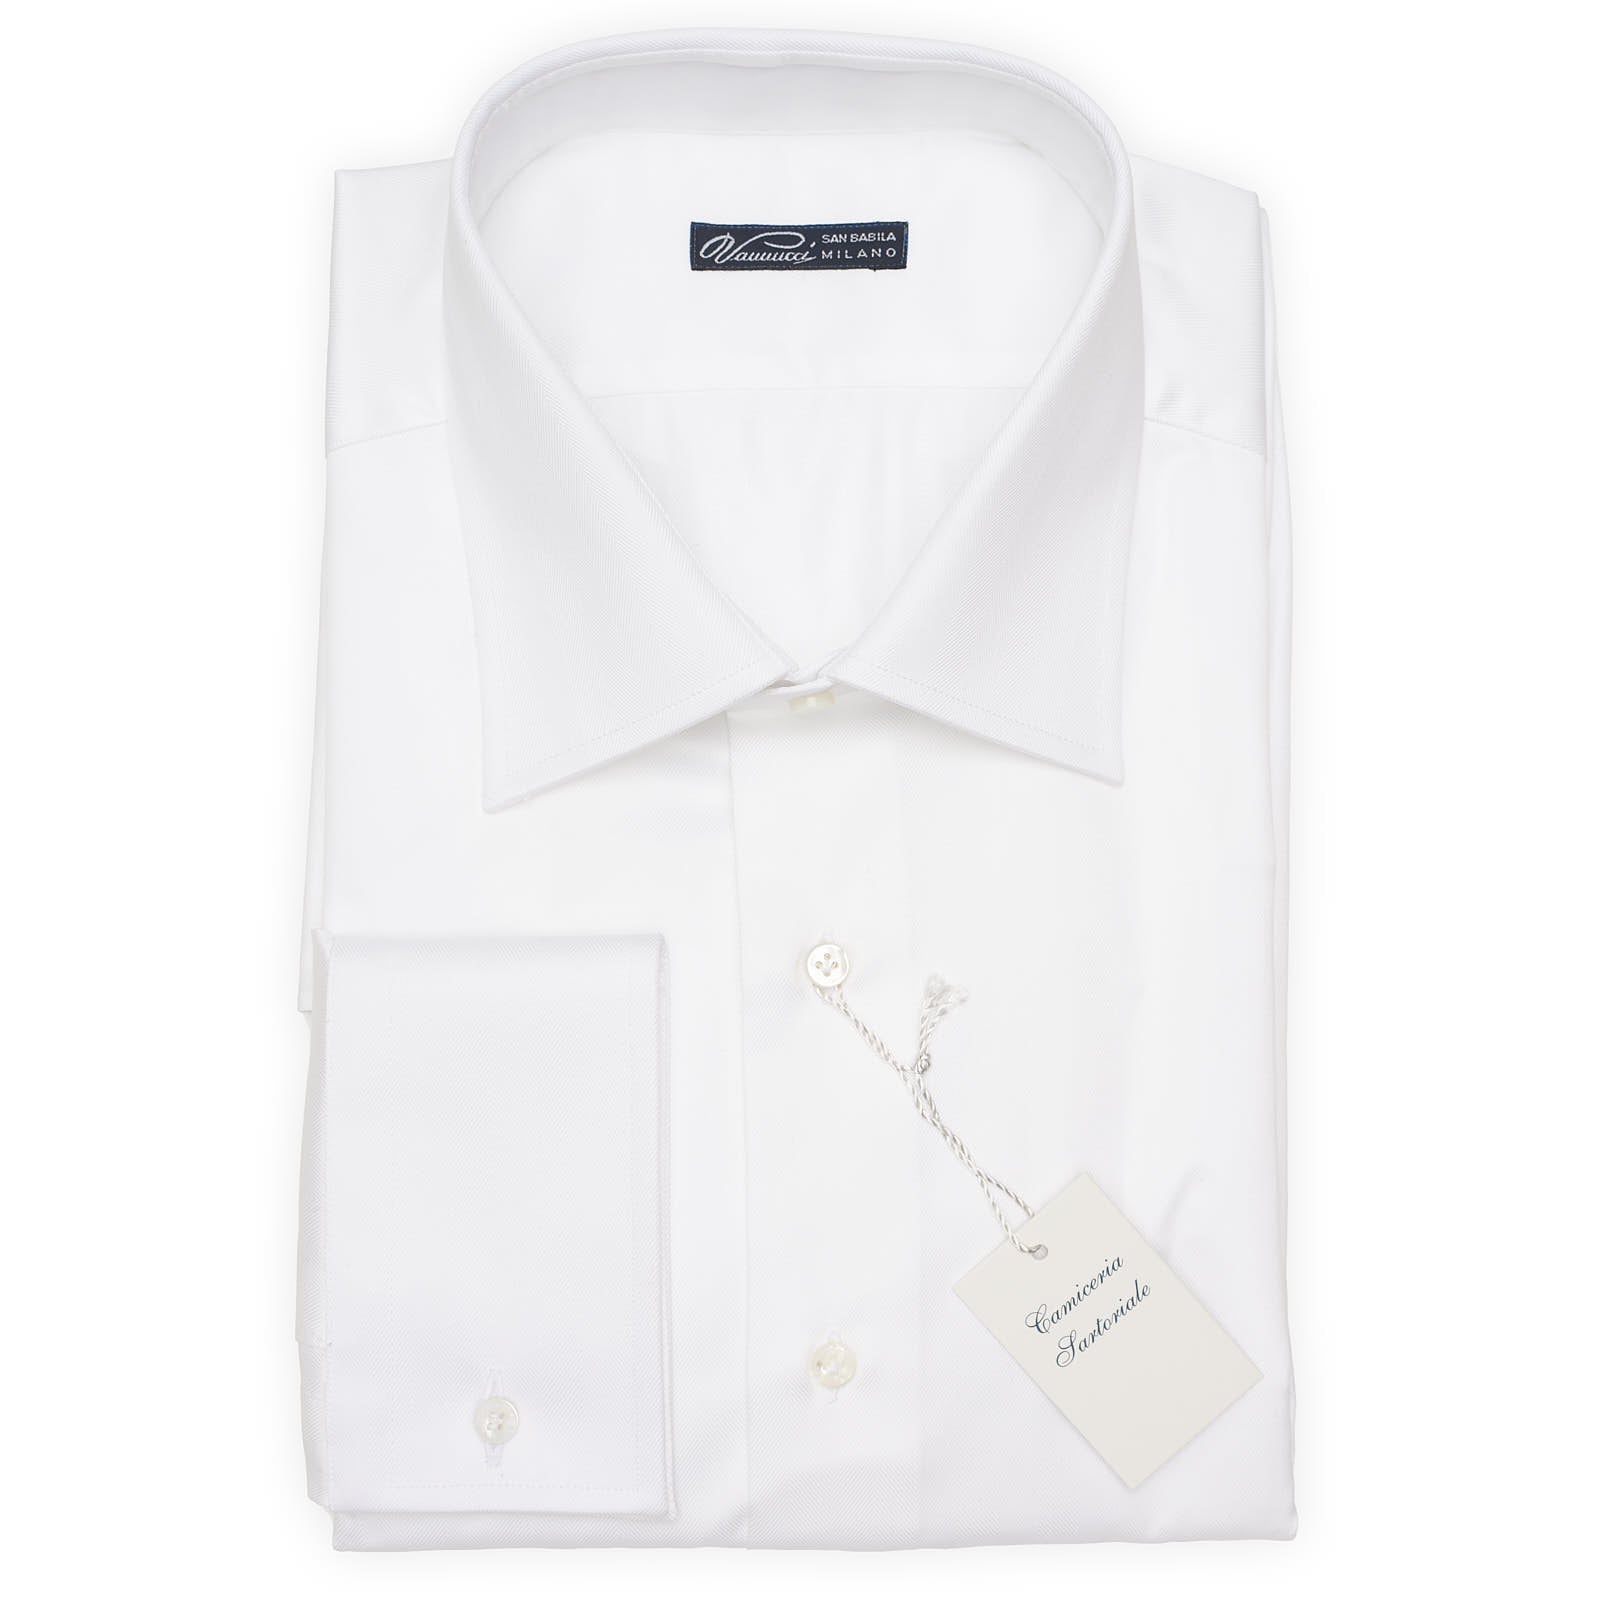 VANNUCCI Milano White Herringbone Cotton French Cuff Dress Shirt EU 45 NEW US 18